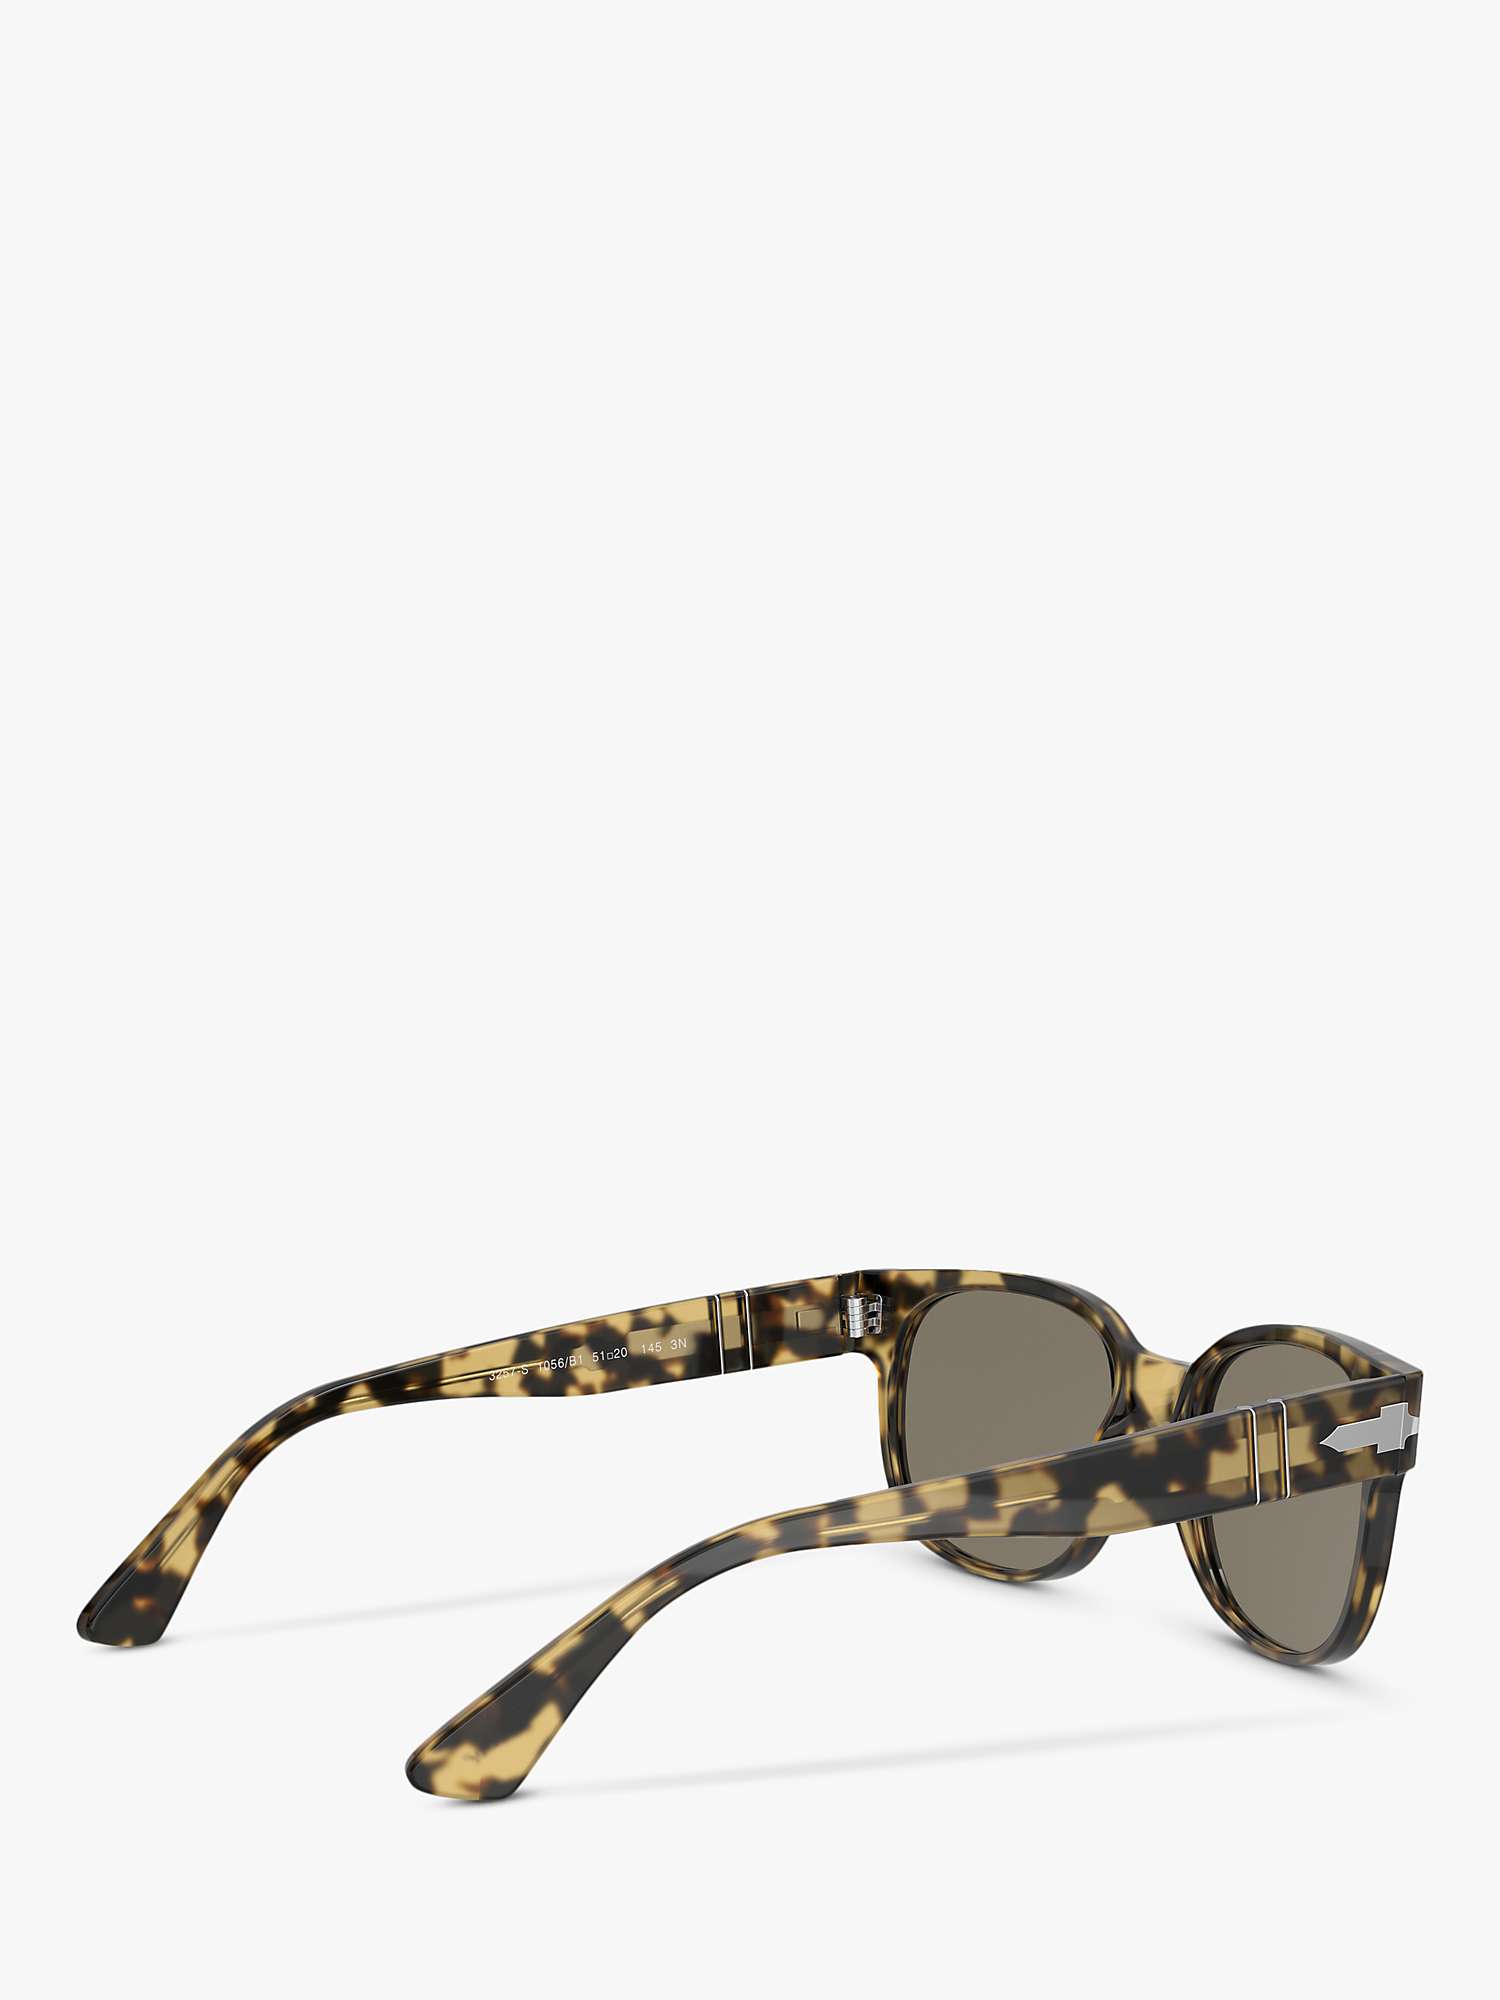 Buy Persol PO3257S Unisex Square Sunglasses Online at johnlewis.com